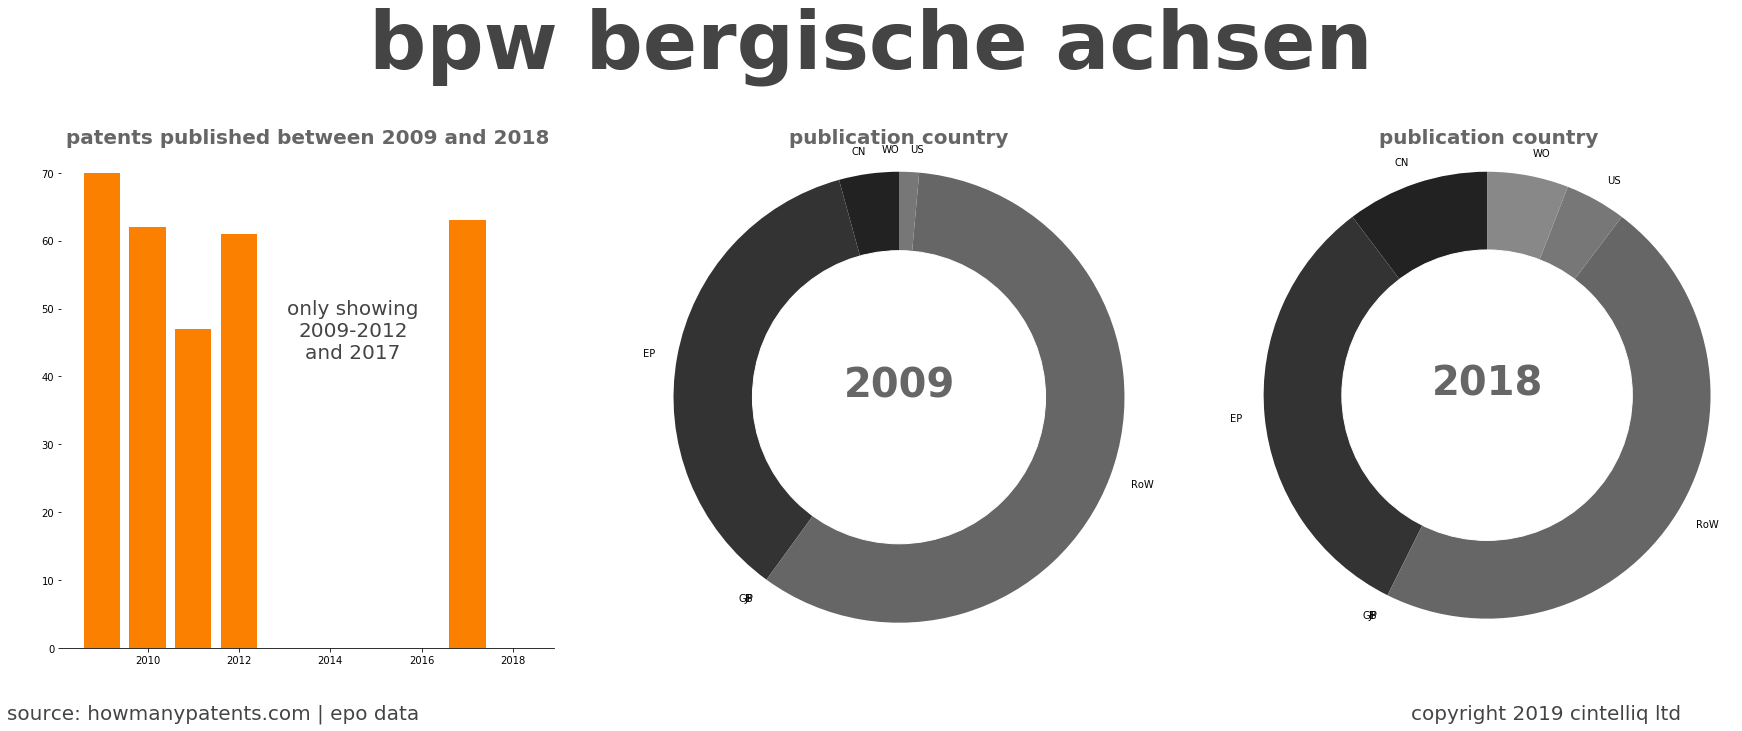 summary of patents for Bpw Bergische Achsen